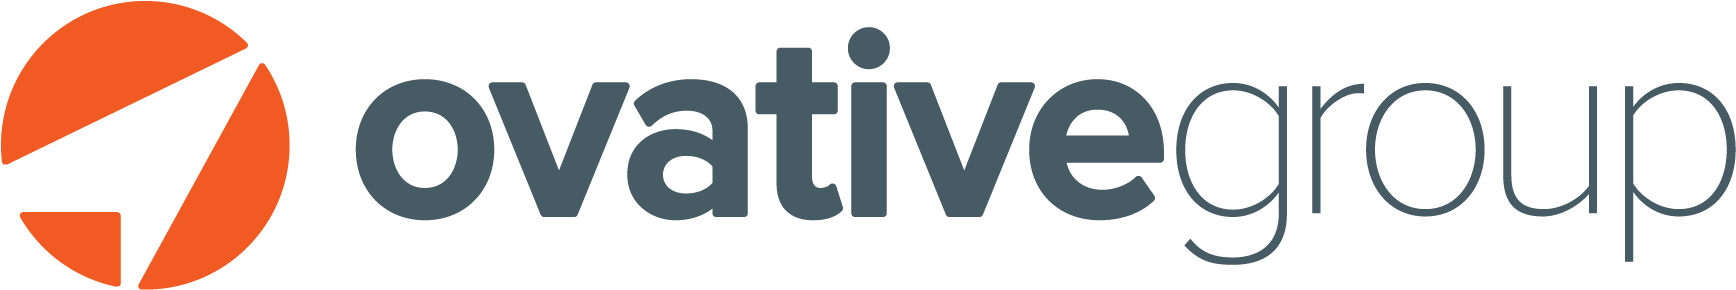 Ovative Group Company Logo